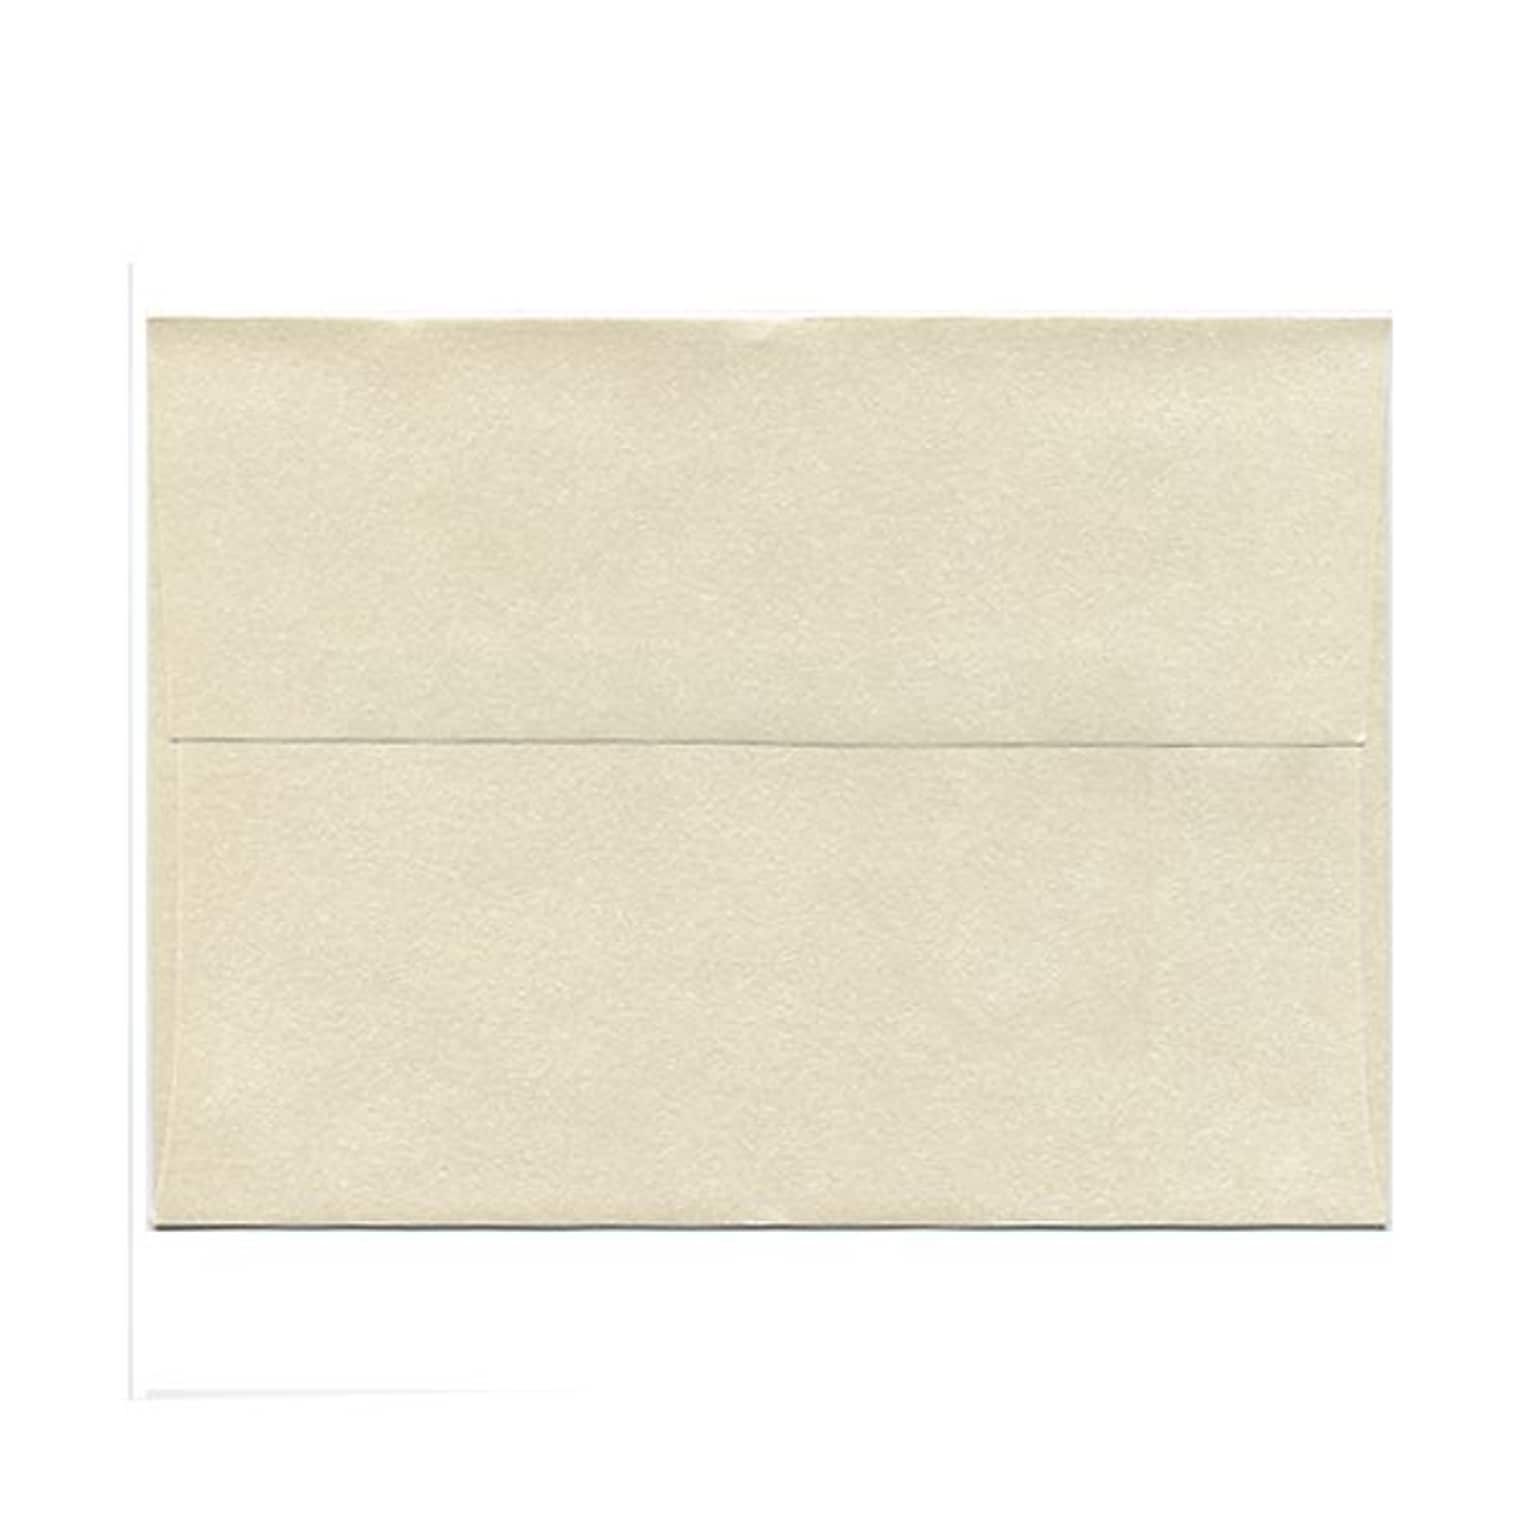 JAM Paper A7 Metallic Invitation Envelopes, 5.25 x 7.25, Stardream Opal, 25/Pack (GCST700)